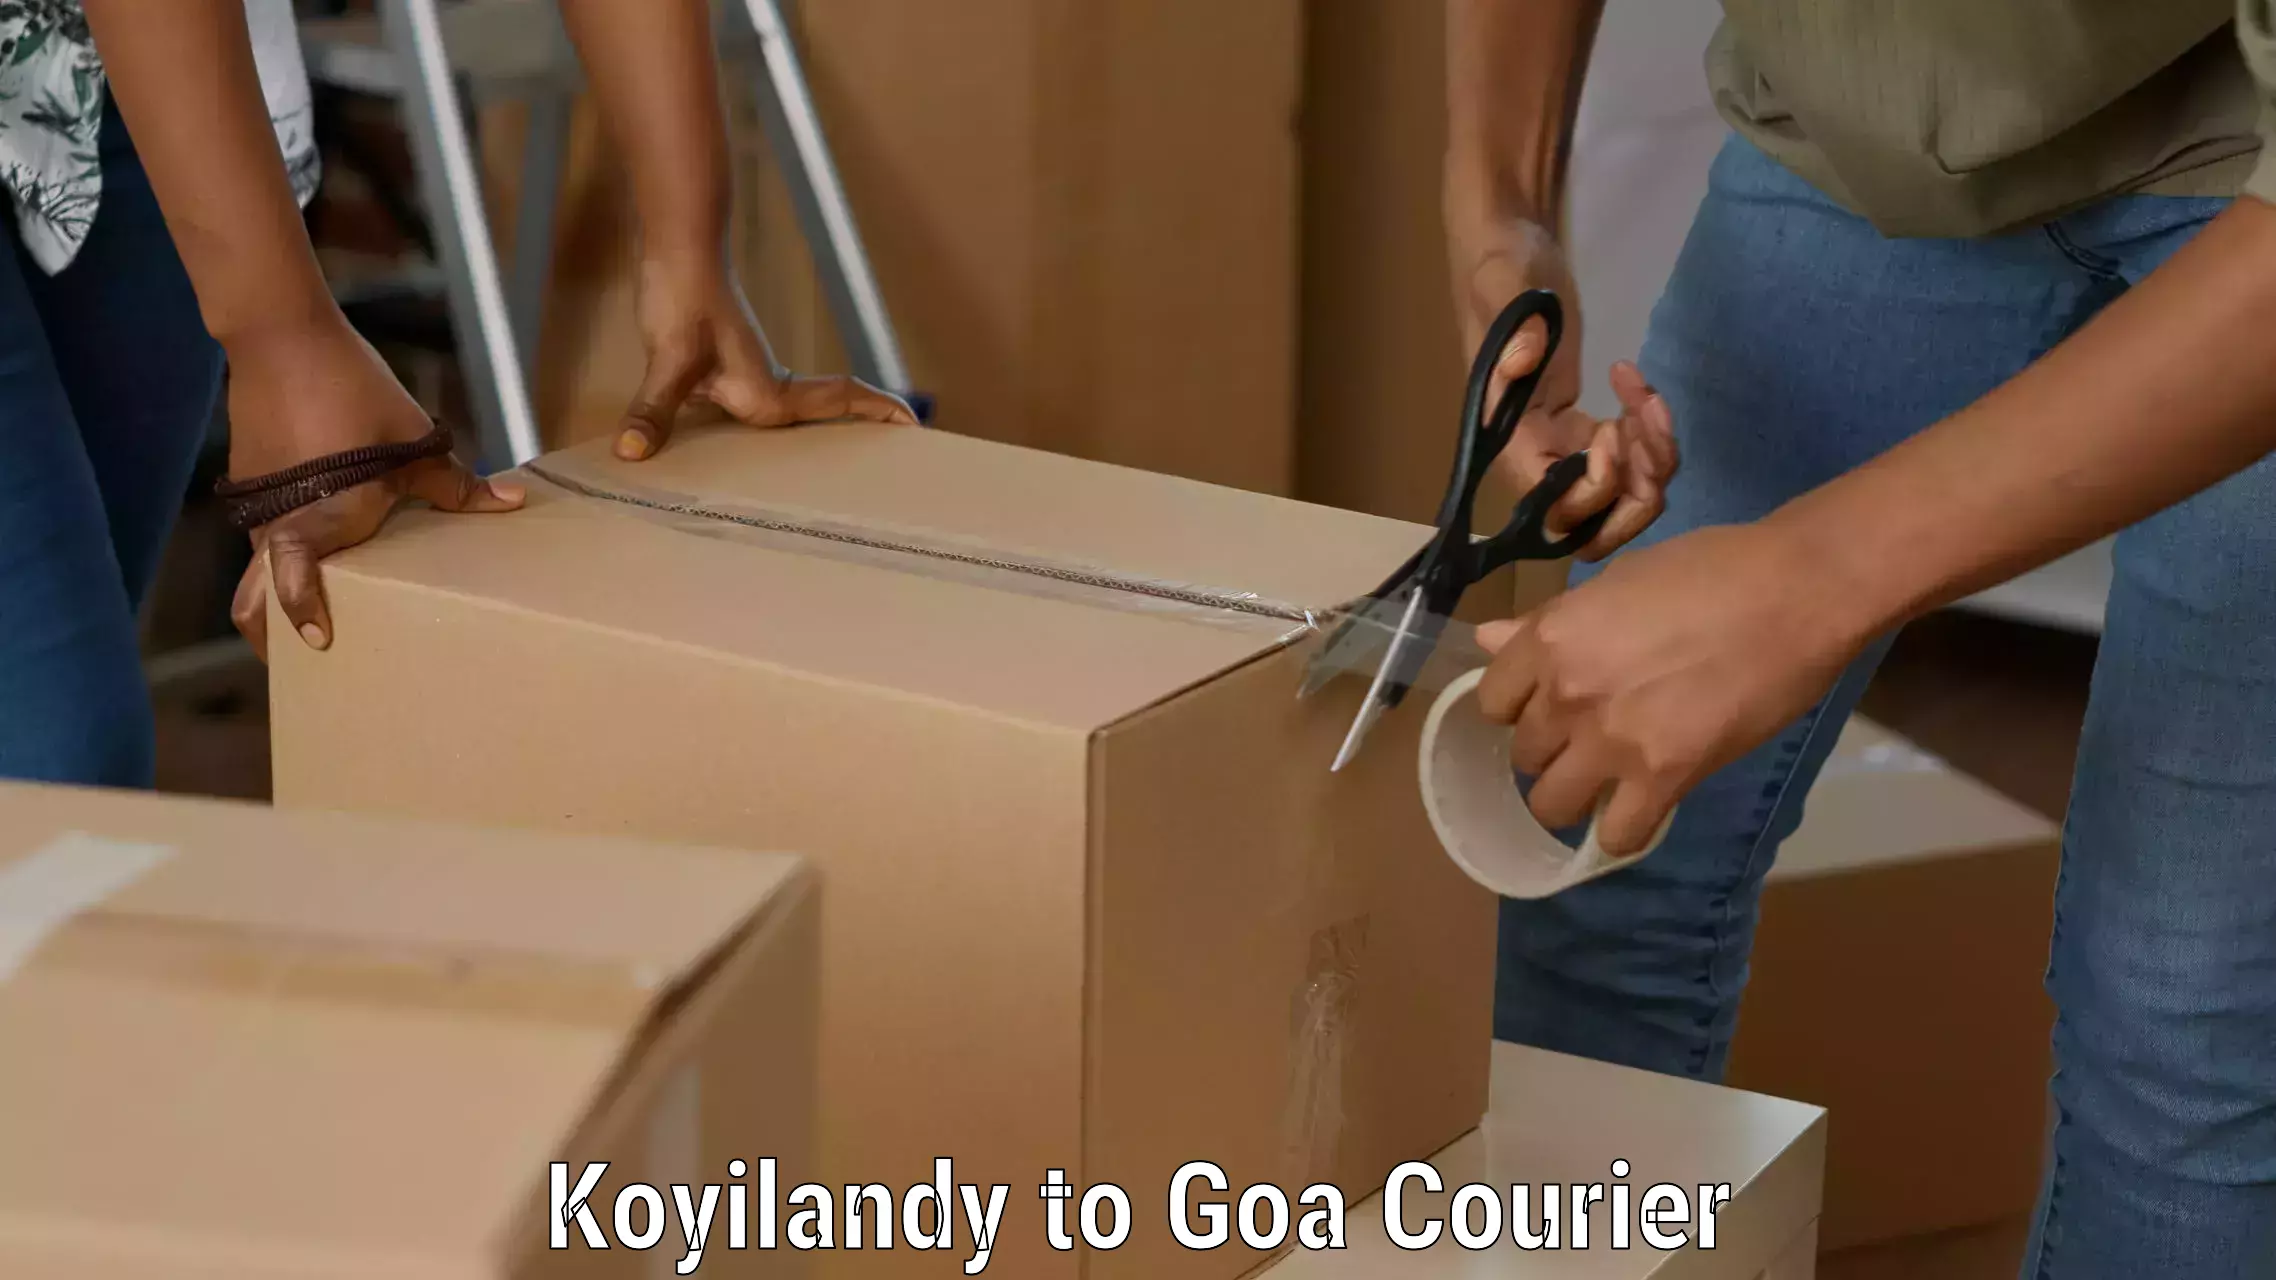 Courier service partnerships Koyilandy to Goa